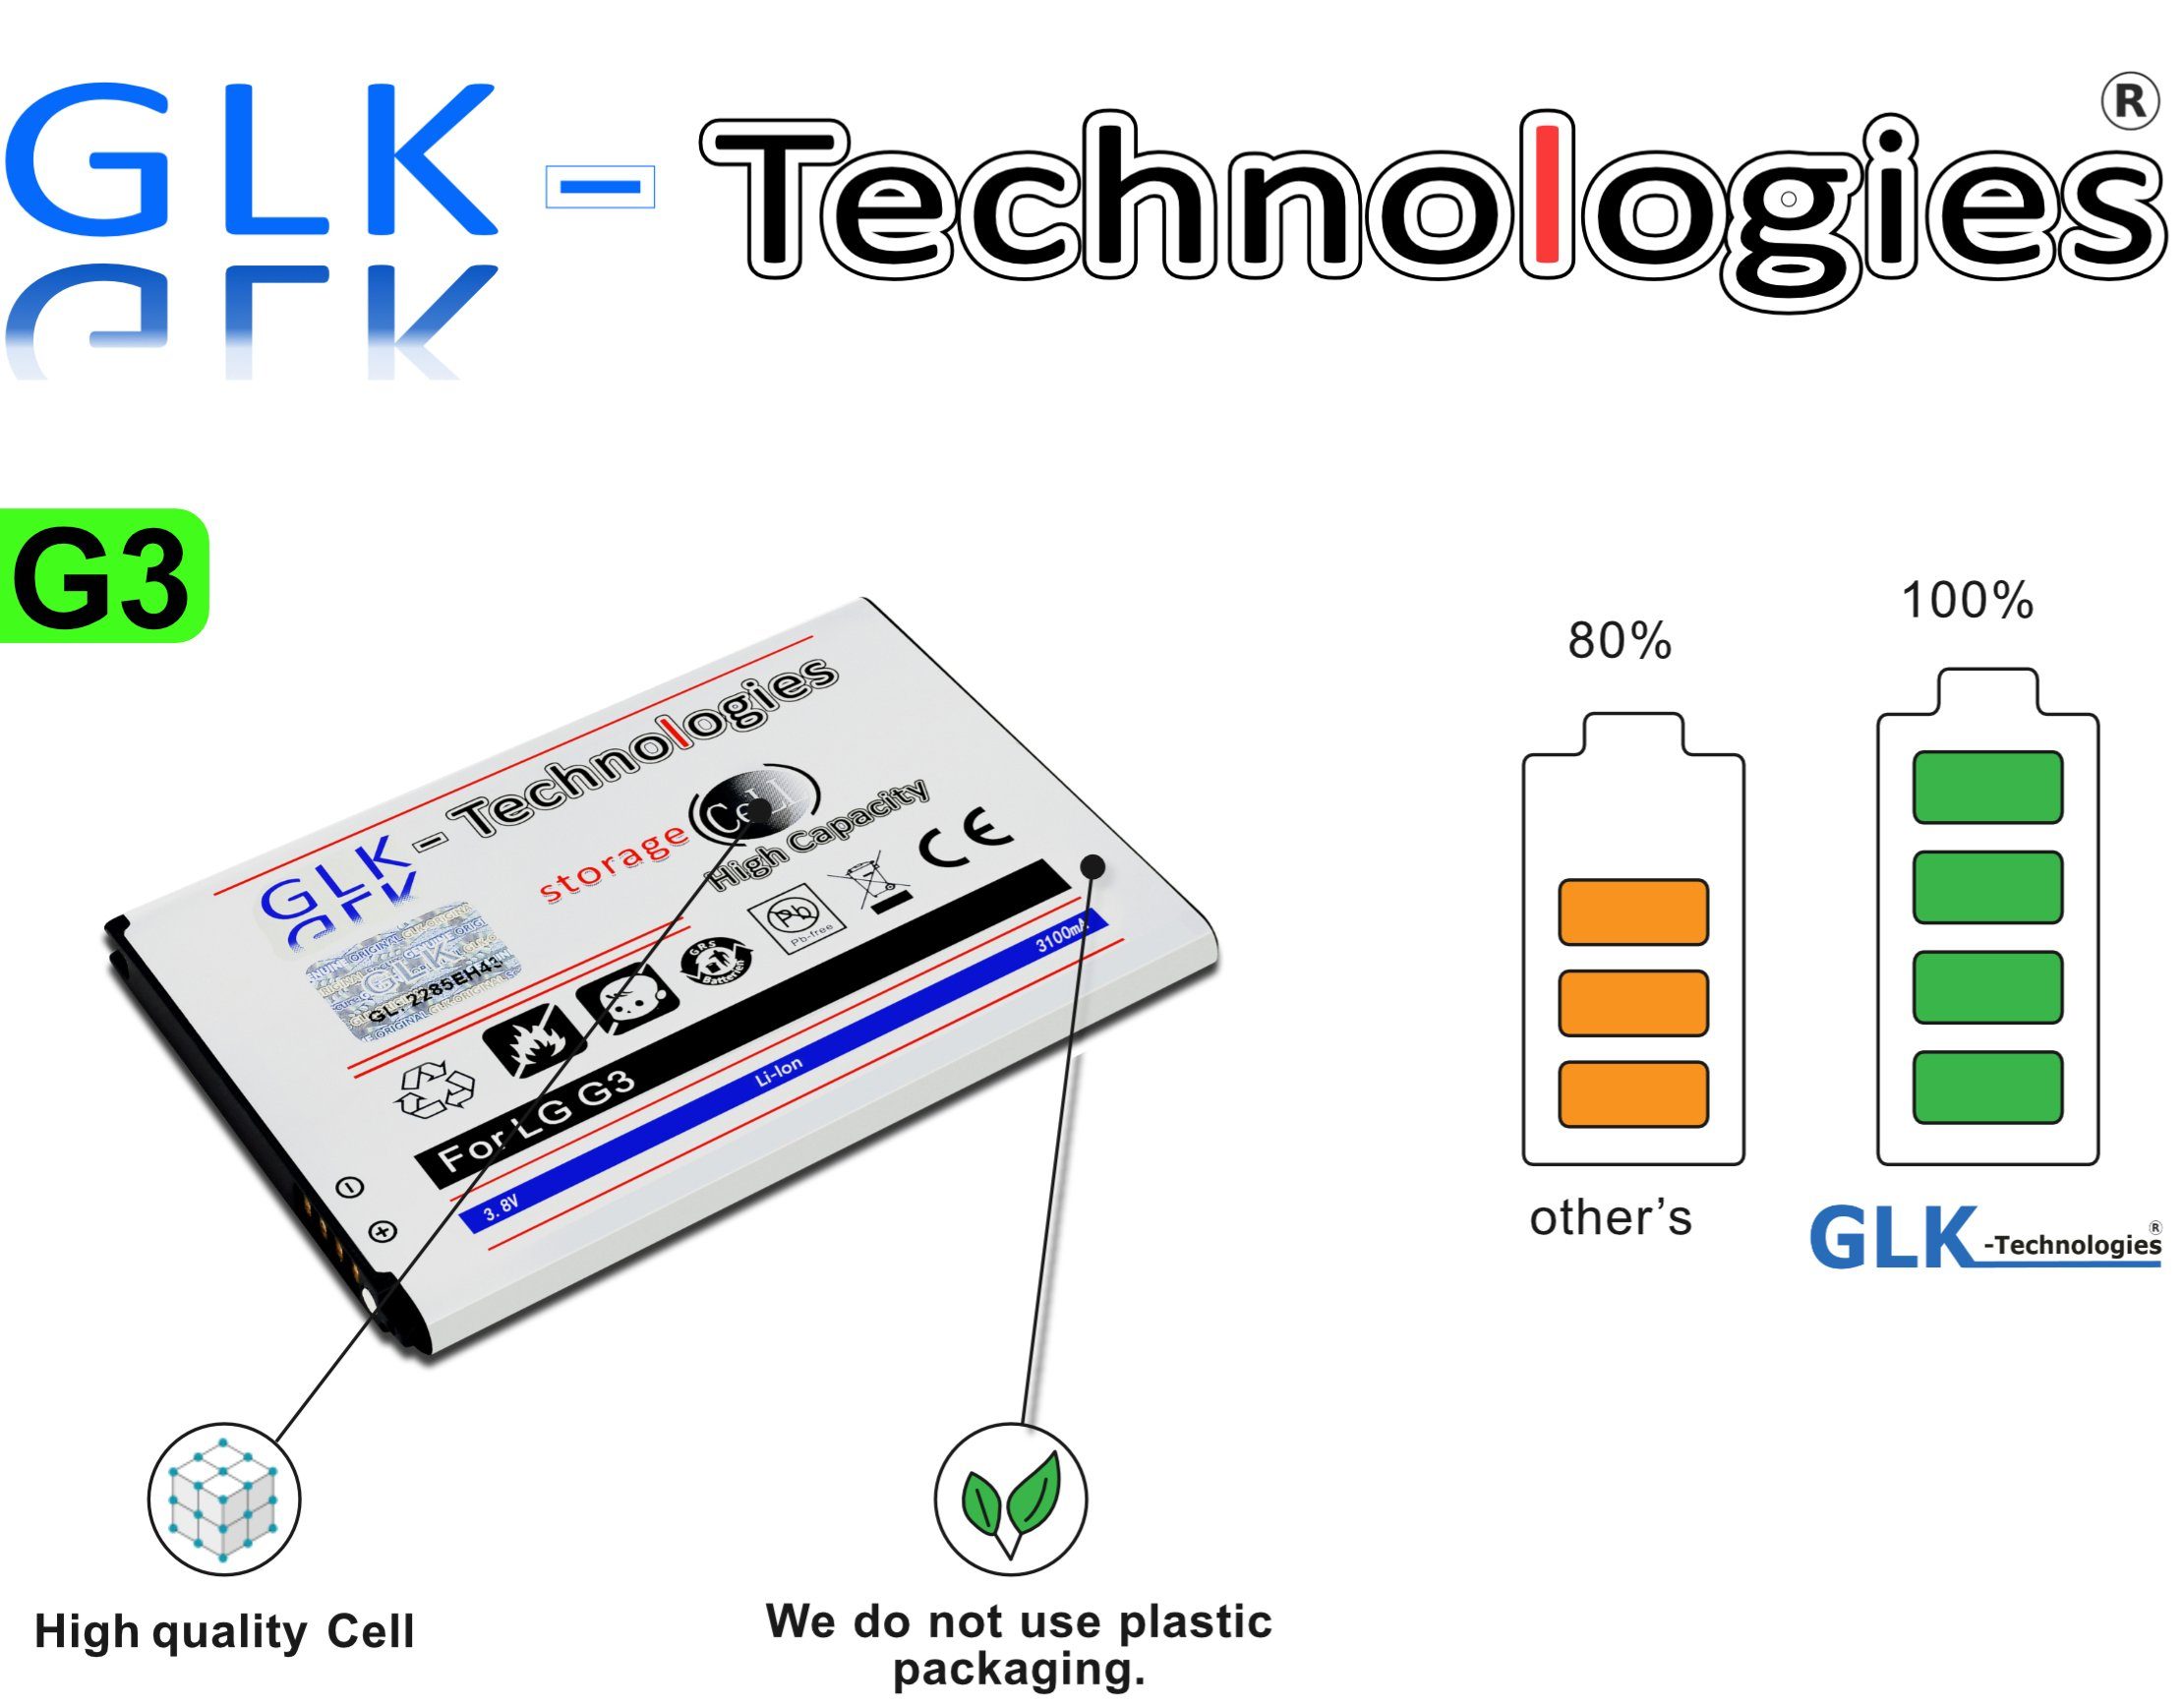 High D850 Ersatzakku kompatibel D855 GLK-Technologies D830 V) Smartphone-Akku LTE, accu, 3100mAh GLK-Technologies LG D851 G3 mit Power mAh Battery, Original D690 (3.8 3100 Akku,